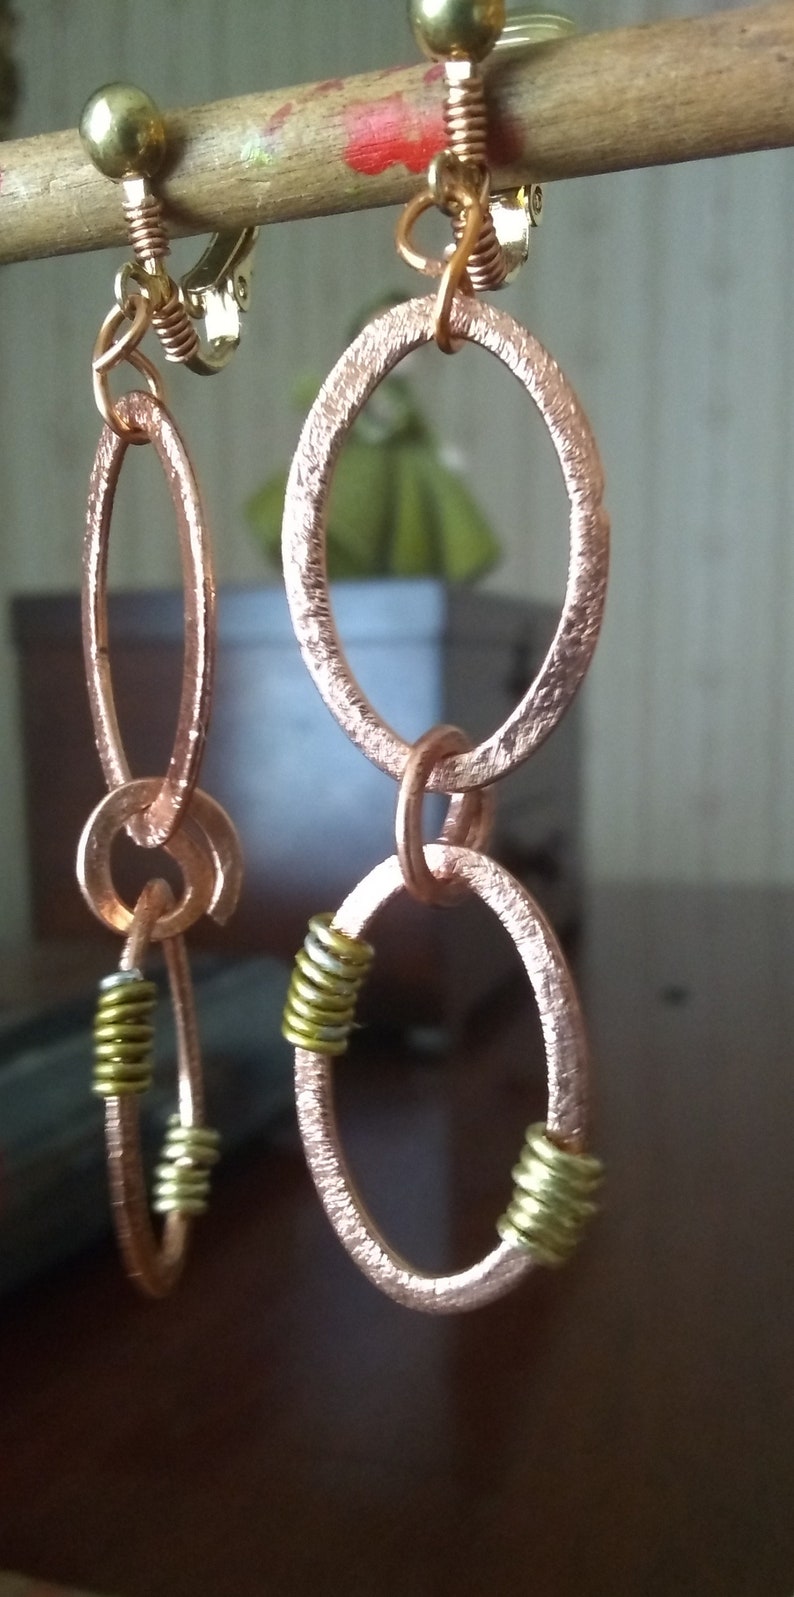 Clip-on Long Dangle Copper and Brass Earrings